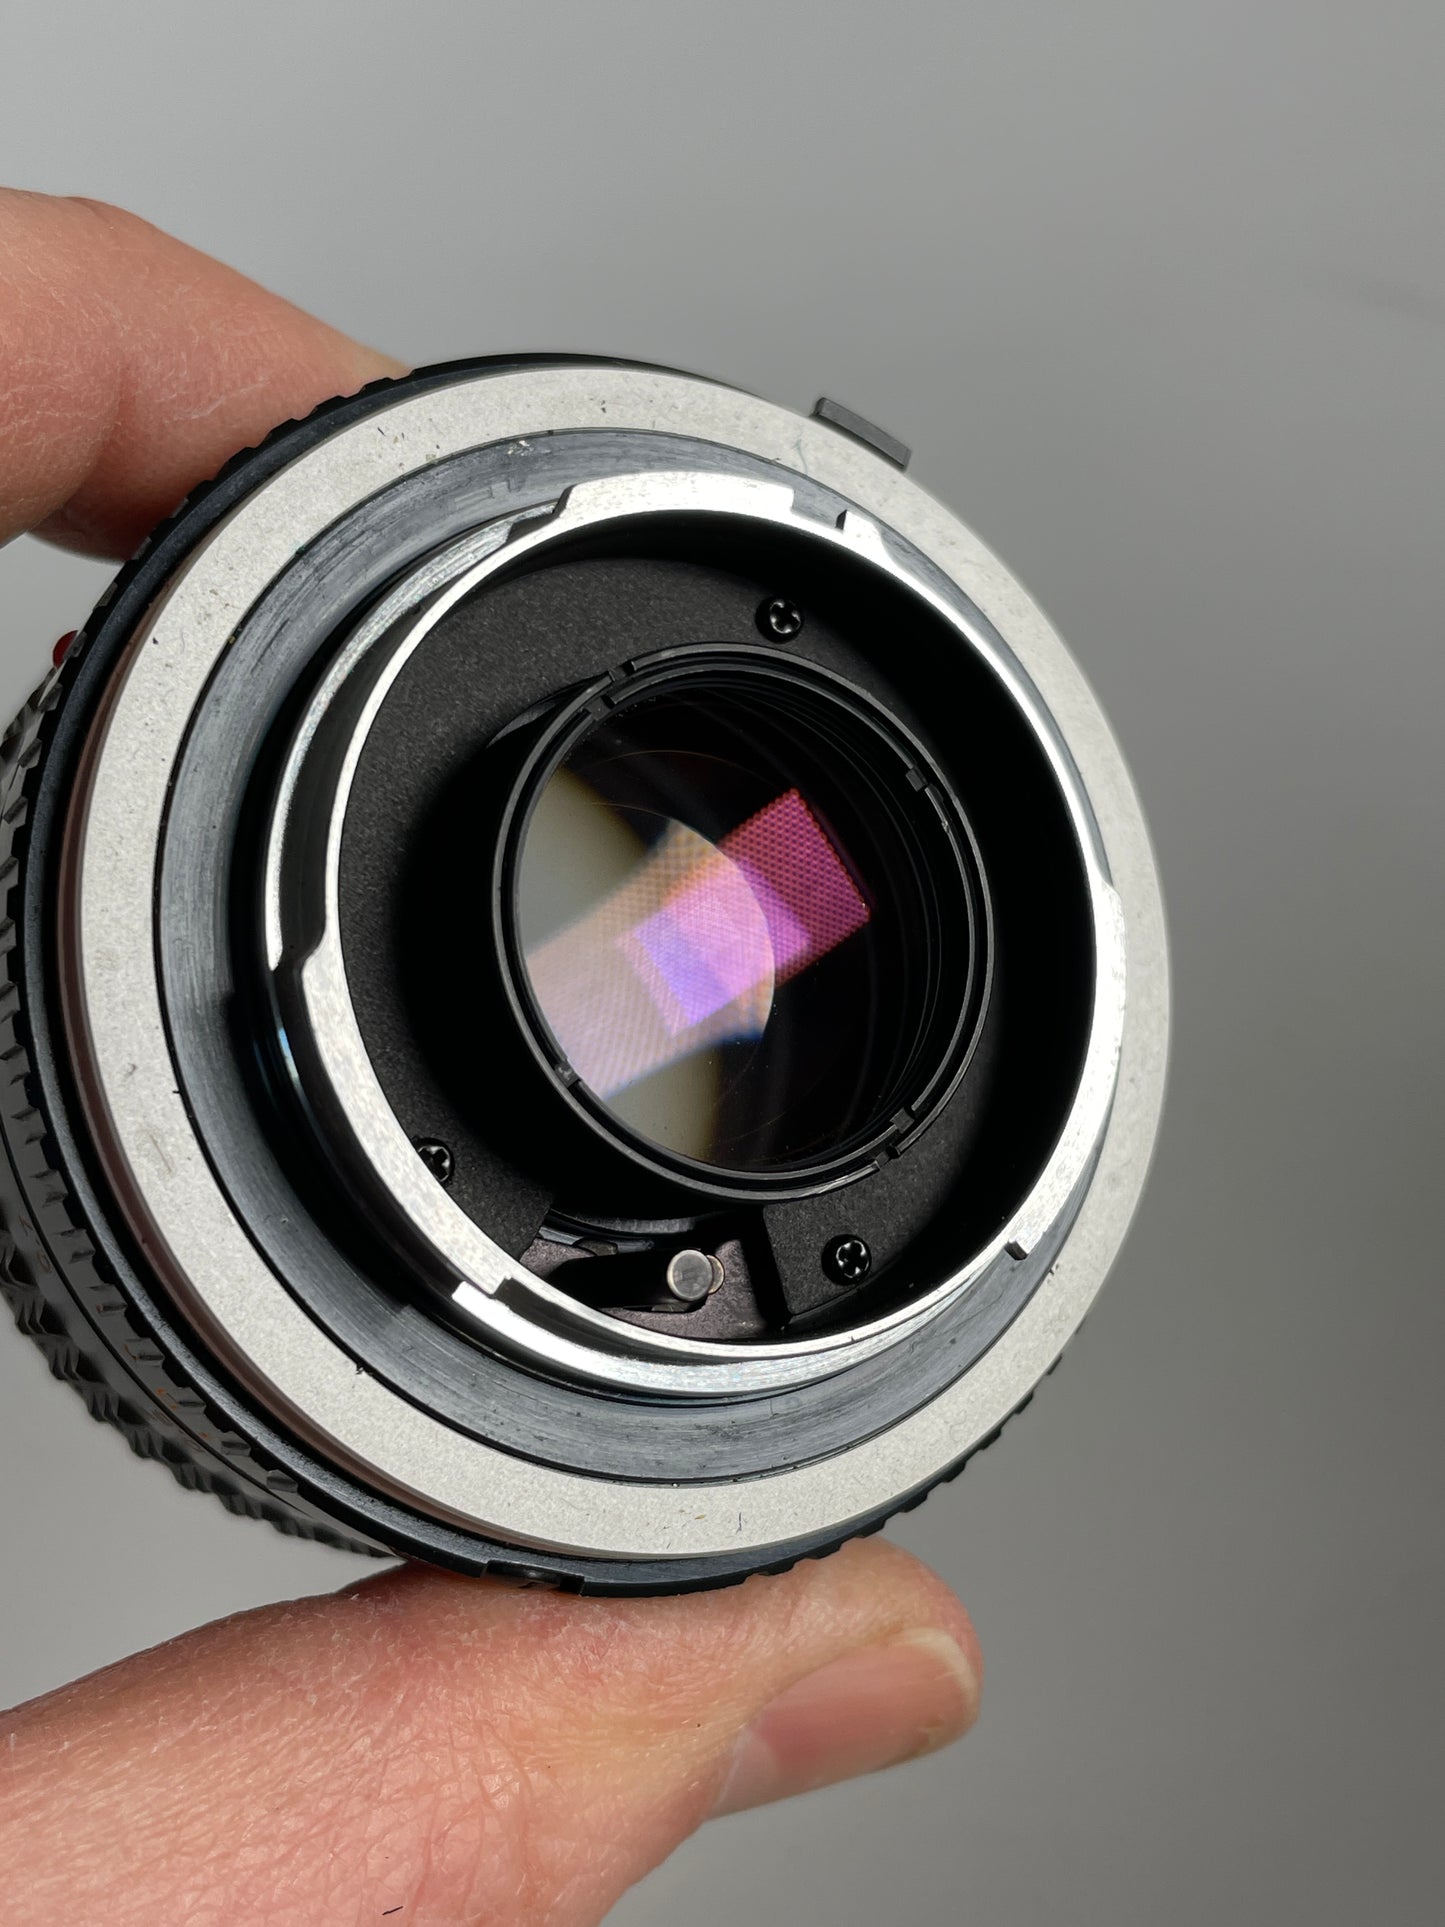 MINOLTA MD Rokkor-X 50mm F1.7 Standard MF Prime lens